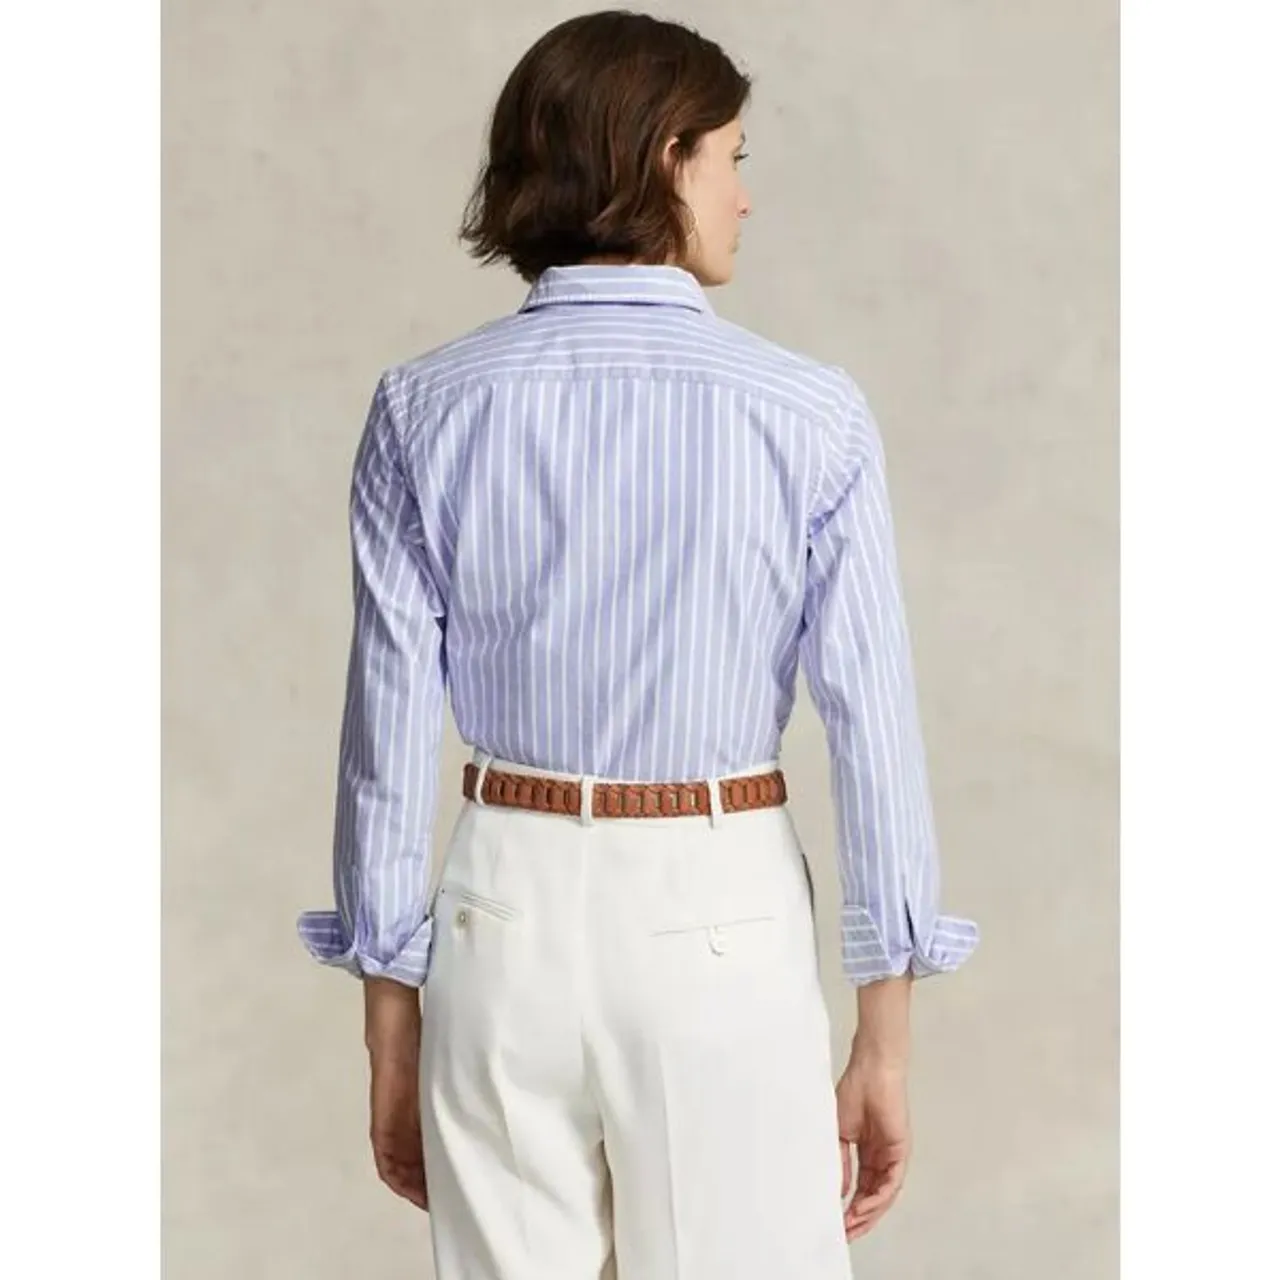 Polo Ralph Lauren Striped Cotton Shirt, Island Blue/White - Island Blue/White - Female